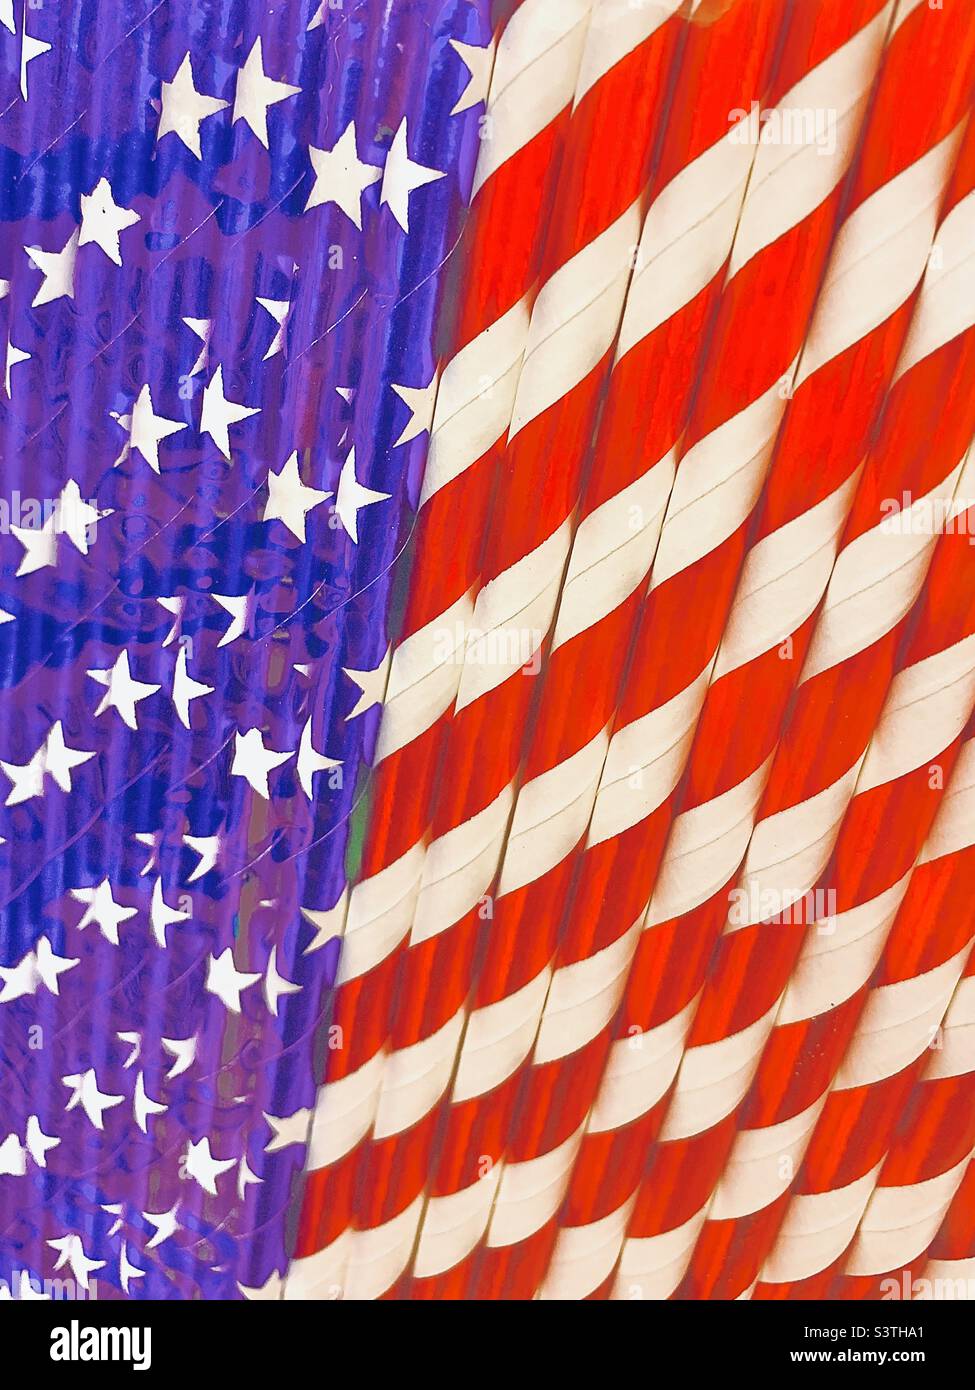 Patriotic American flag flag background Stock Photo